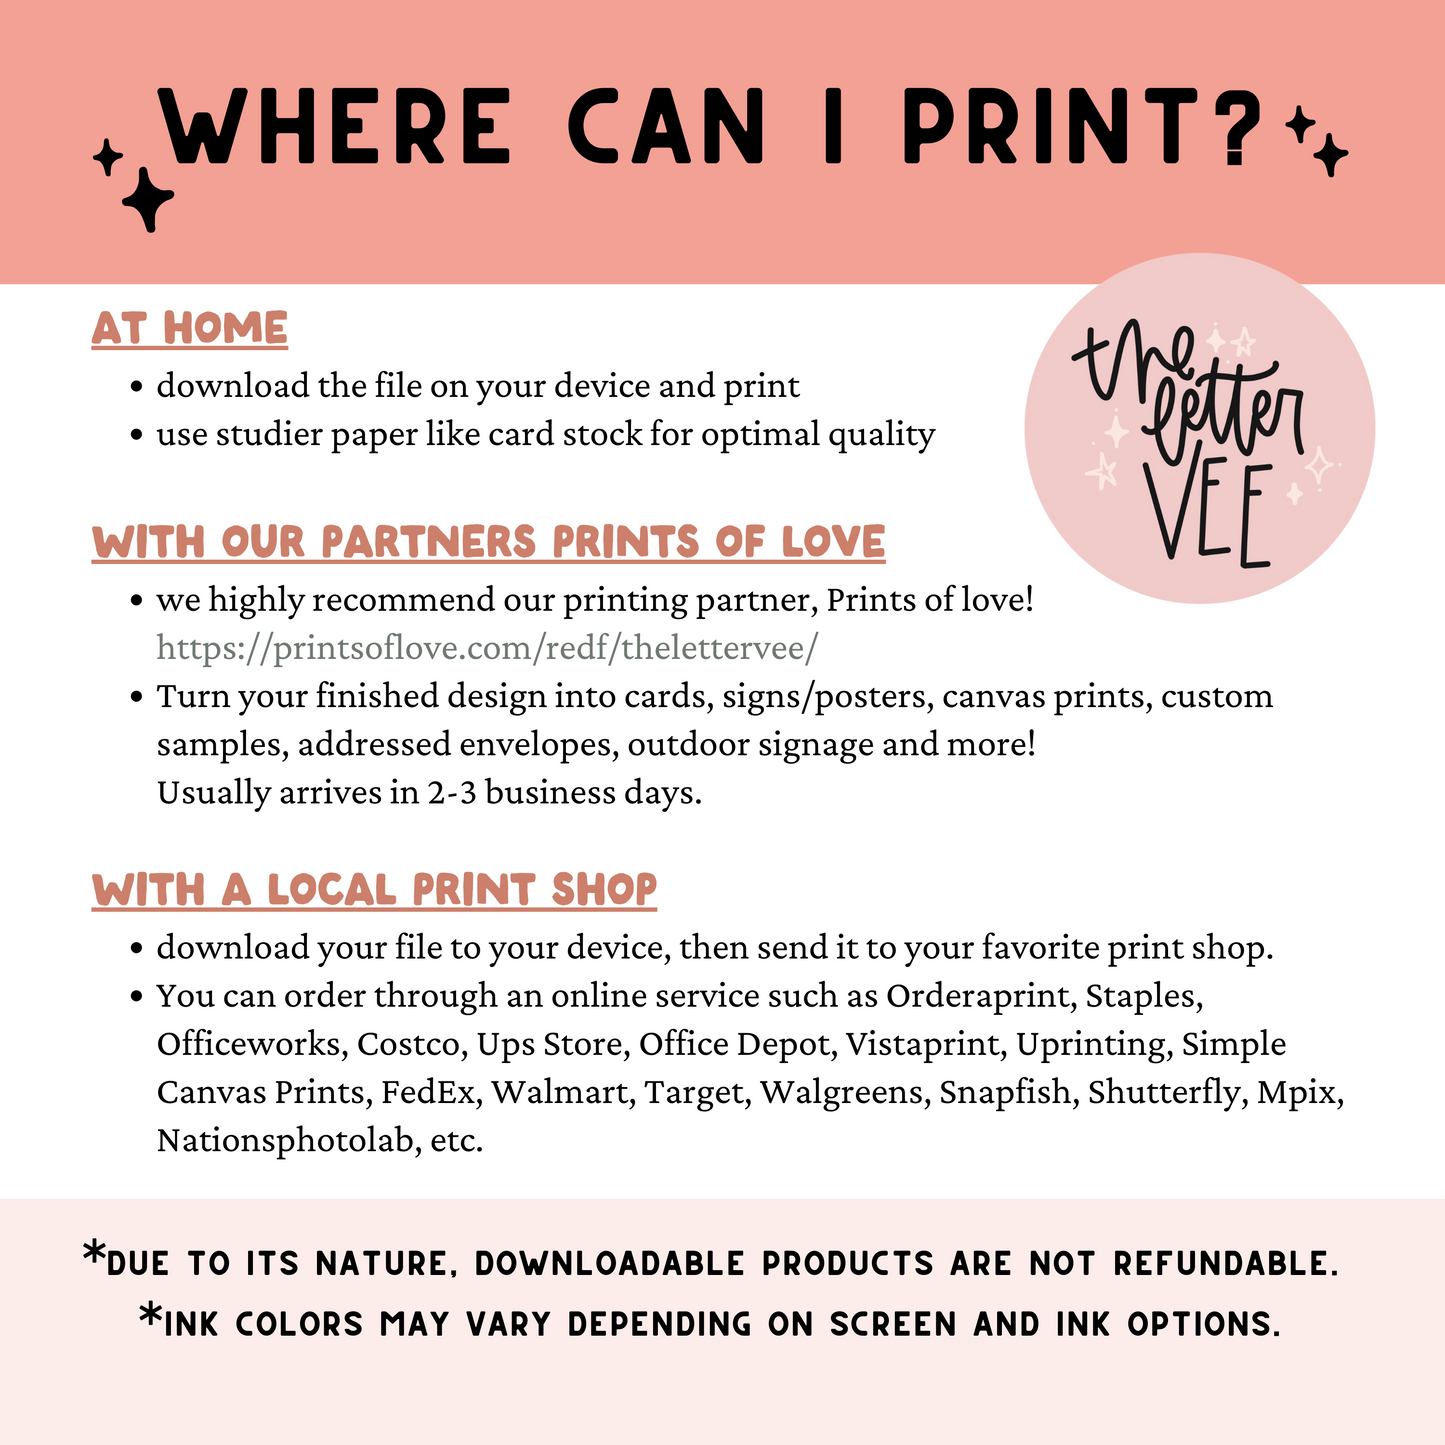 We just CLICK Valentines | Printable Valentines